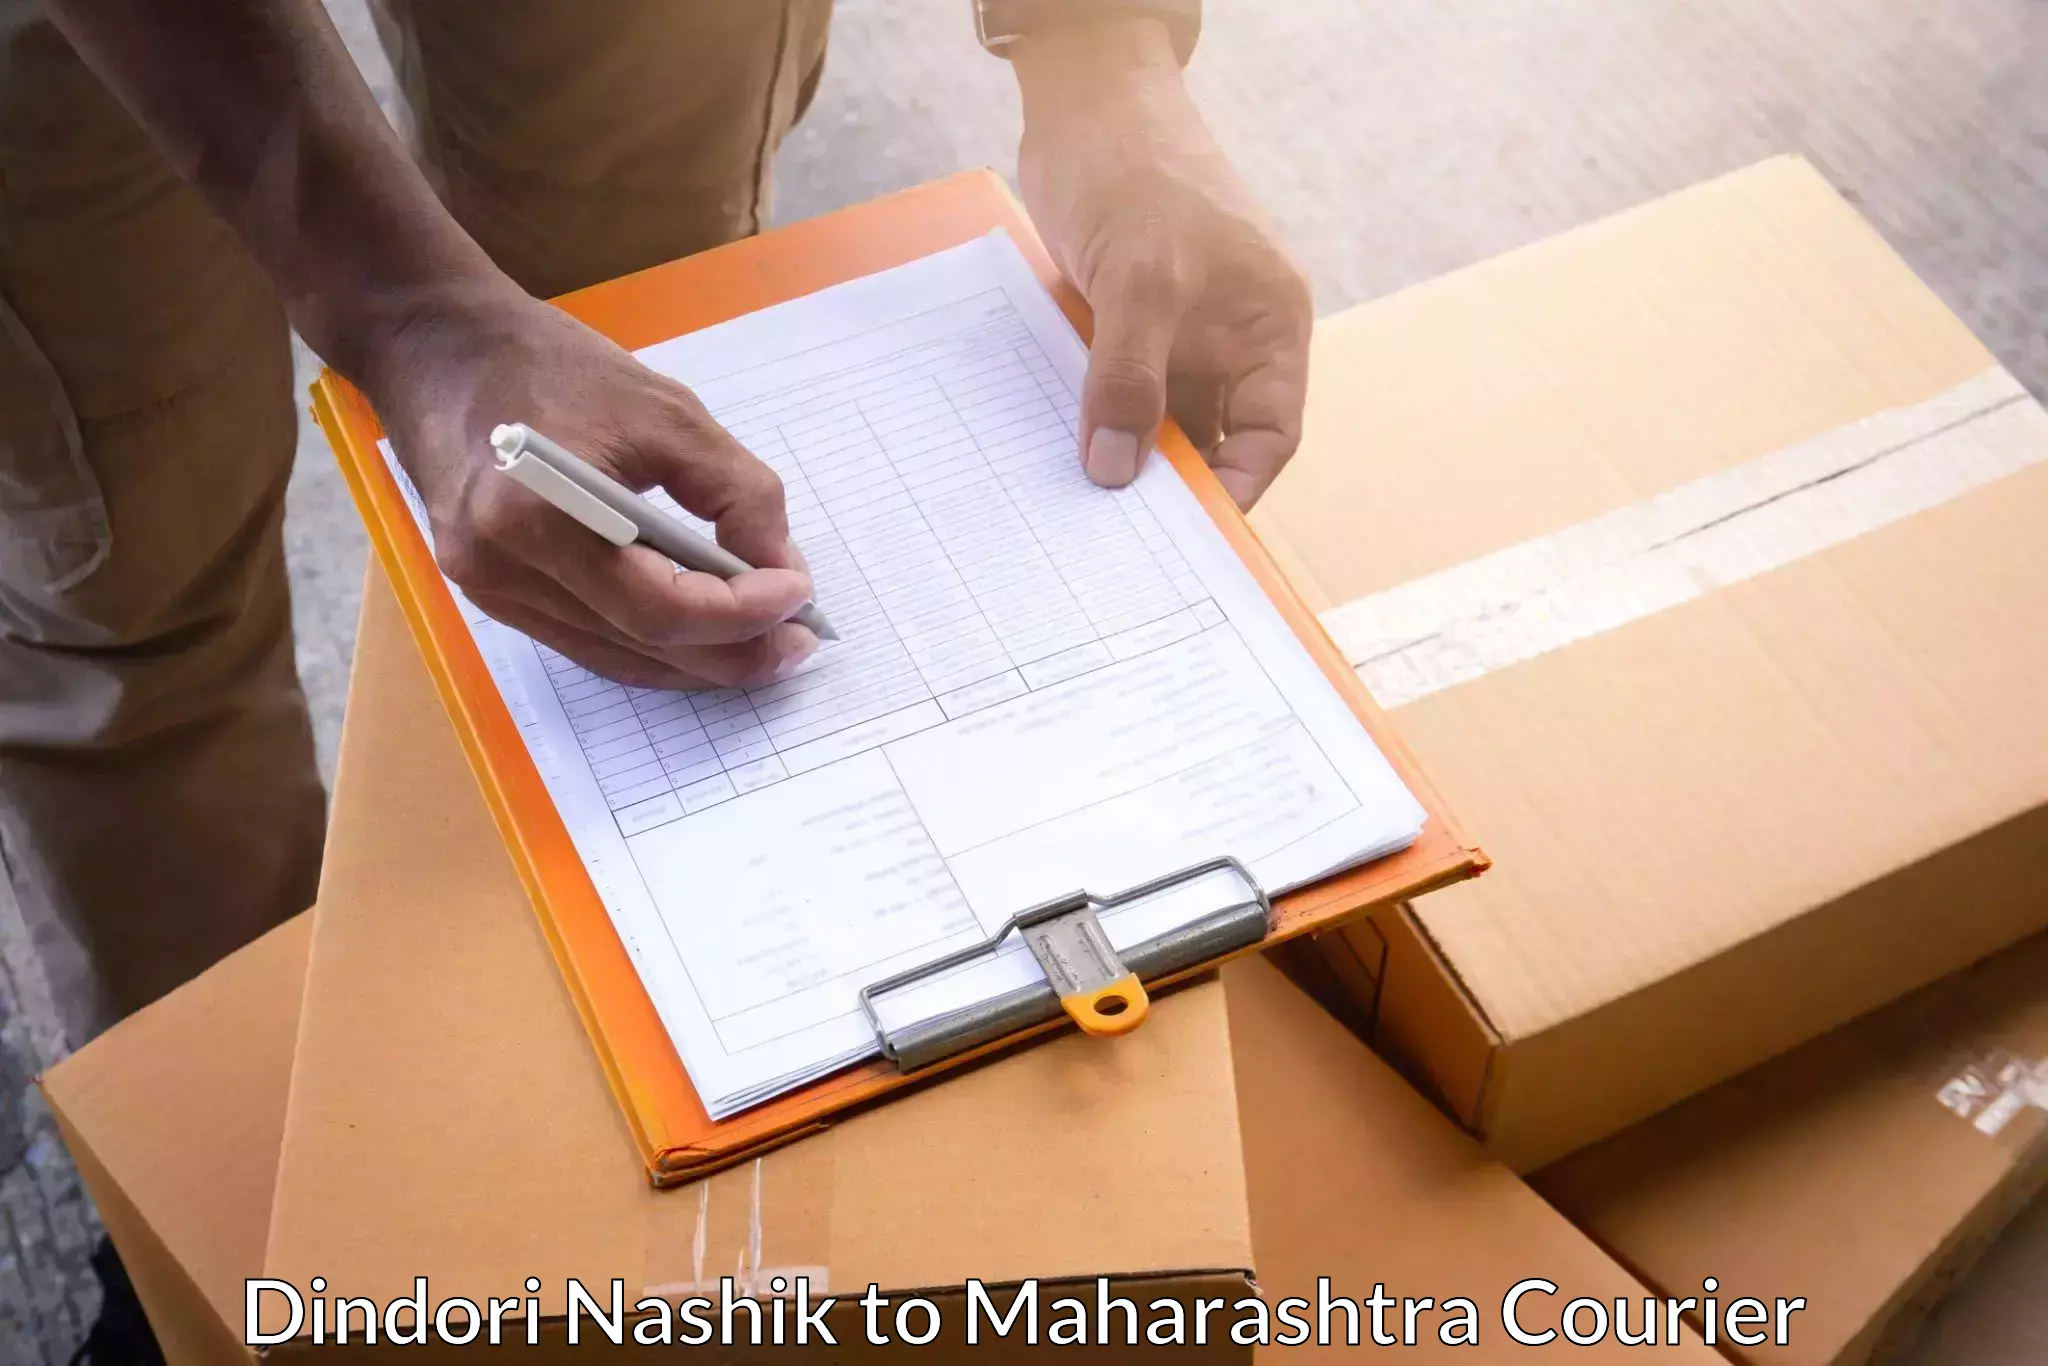 Modern courier technology Dindori Nashik to Worli